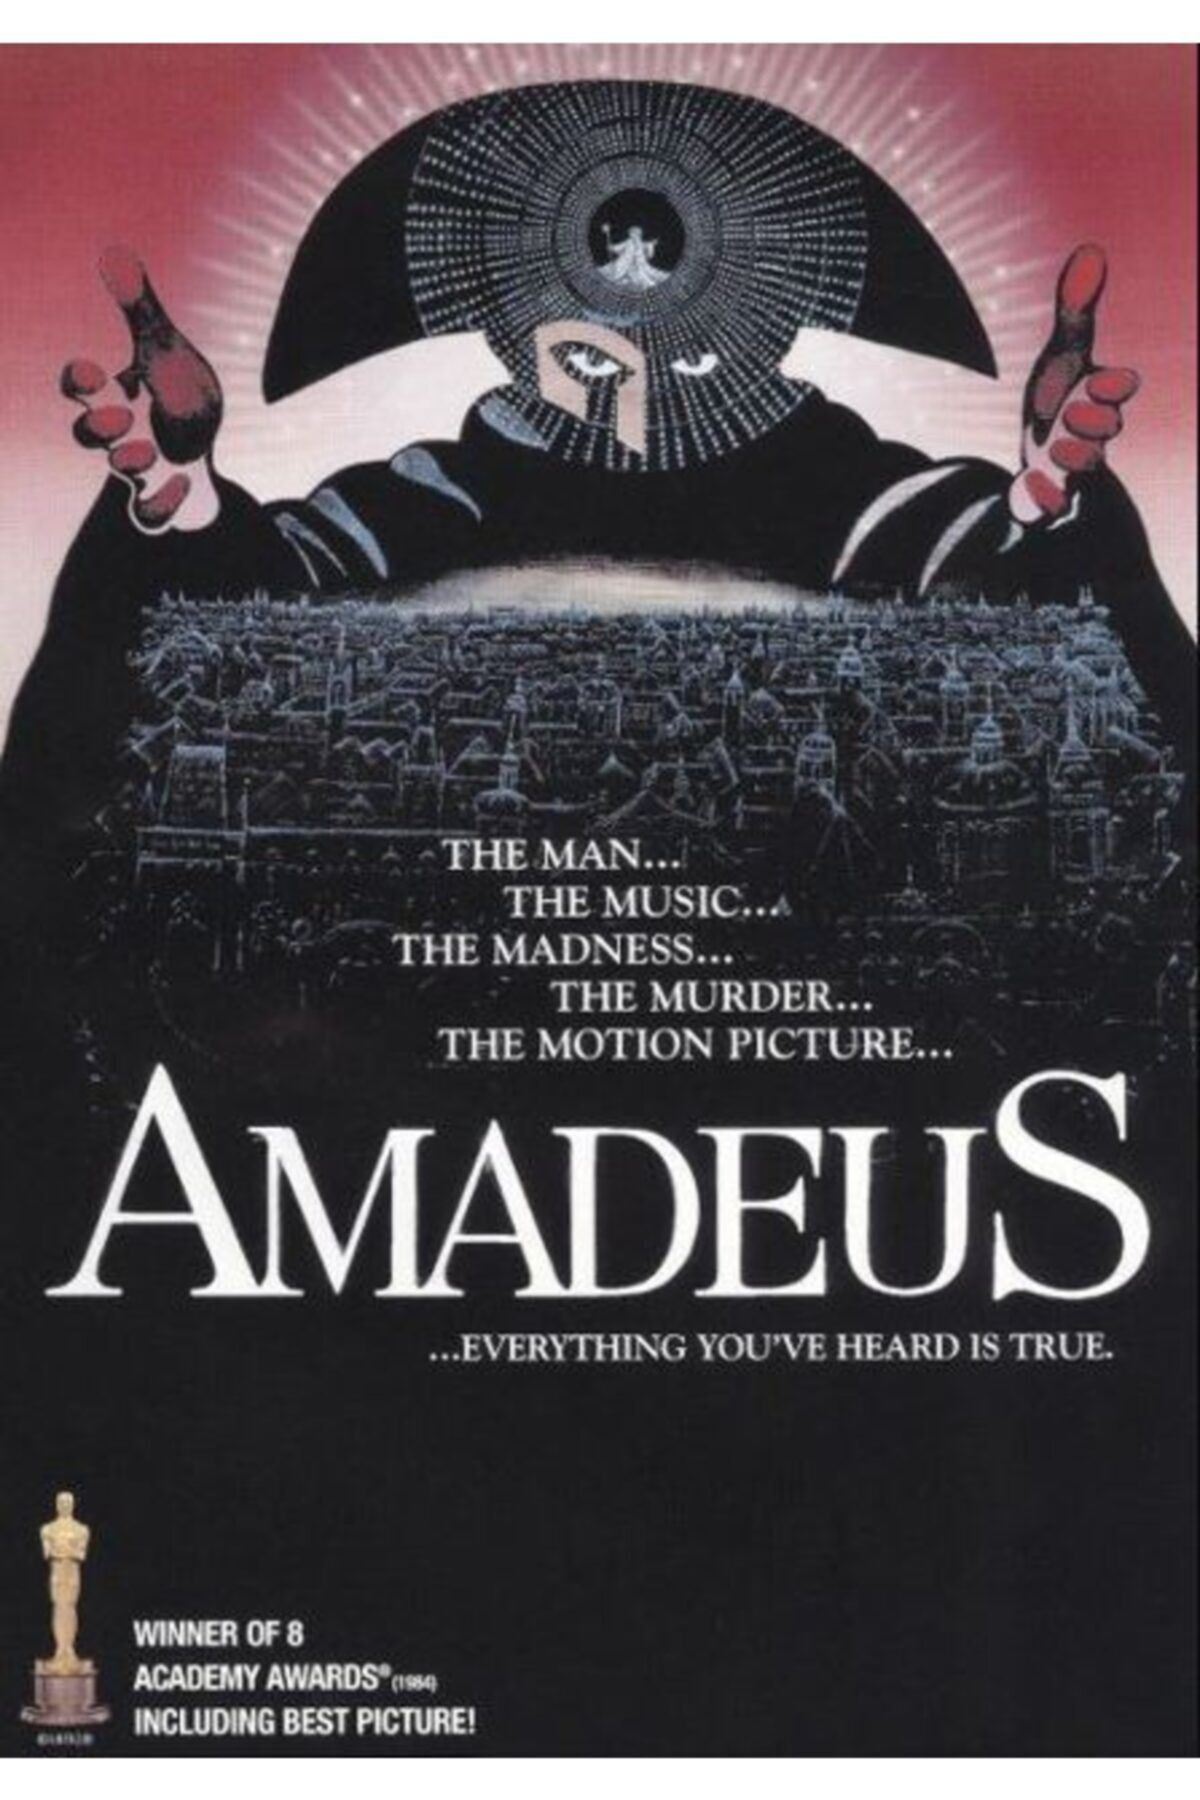 Warner Bros Amadeus Dvd